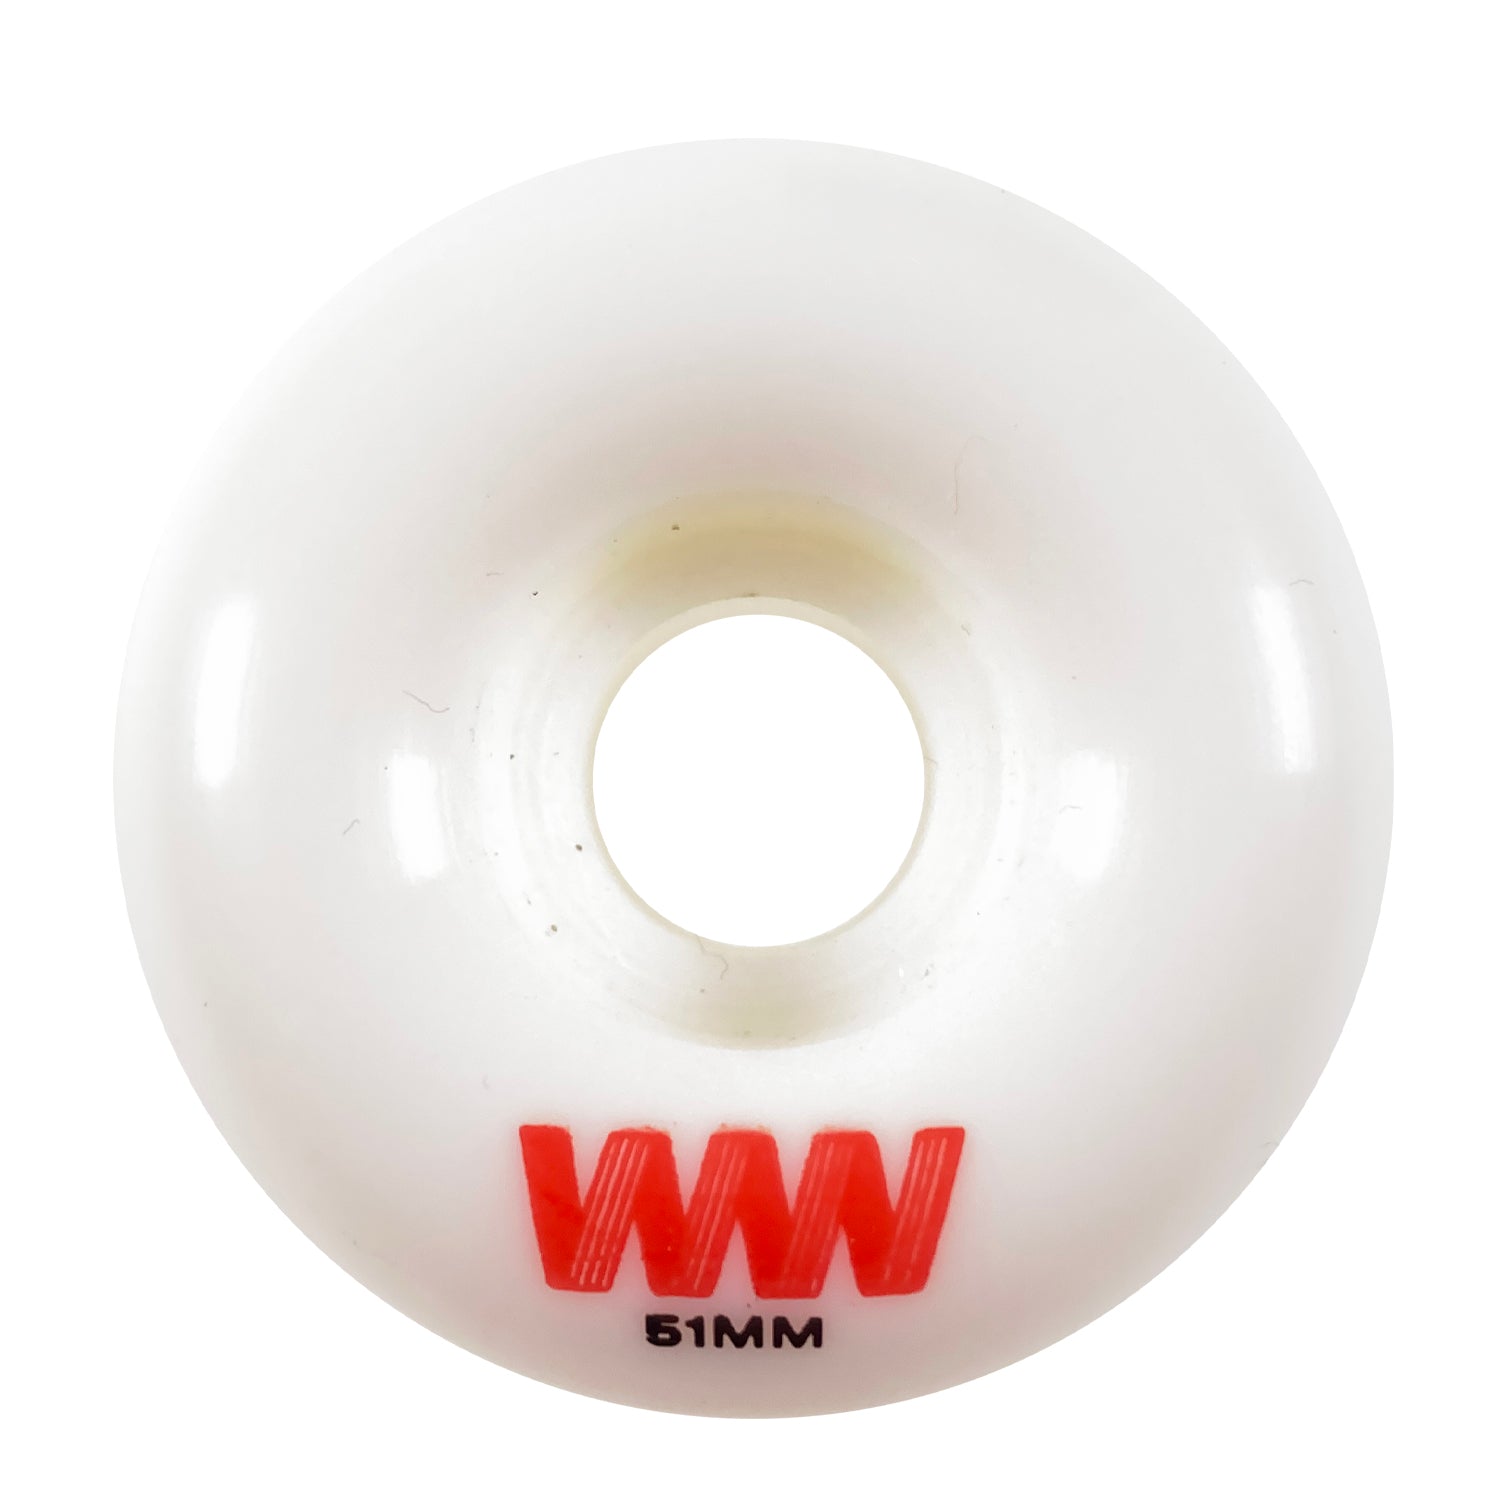 Wayward Wheels - 51mm - Waypoint Wheel - White / Red - Prime Delux Store